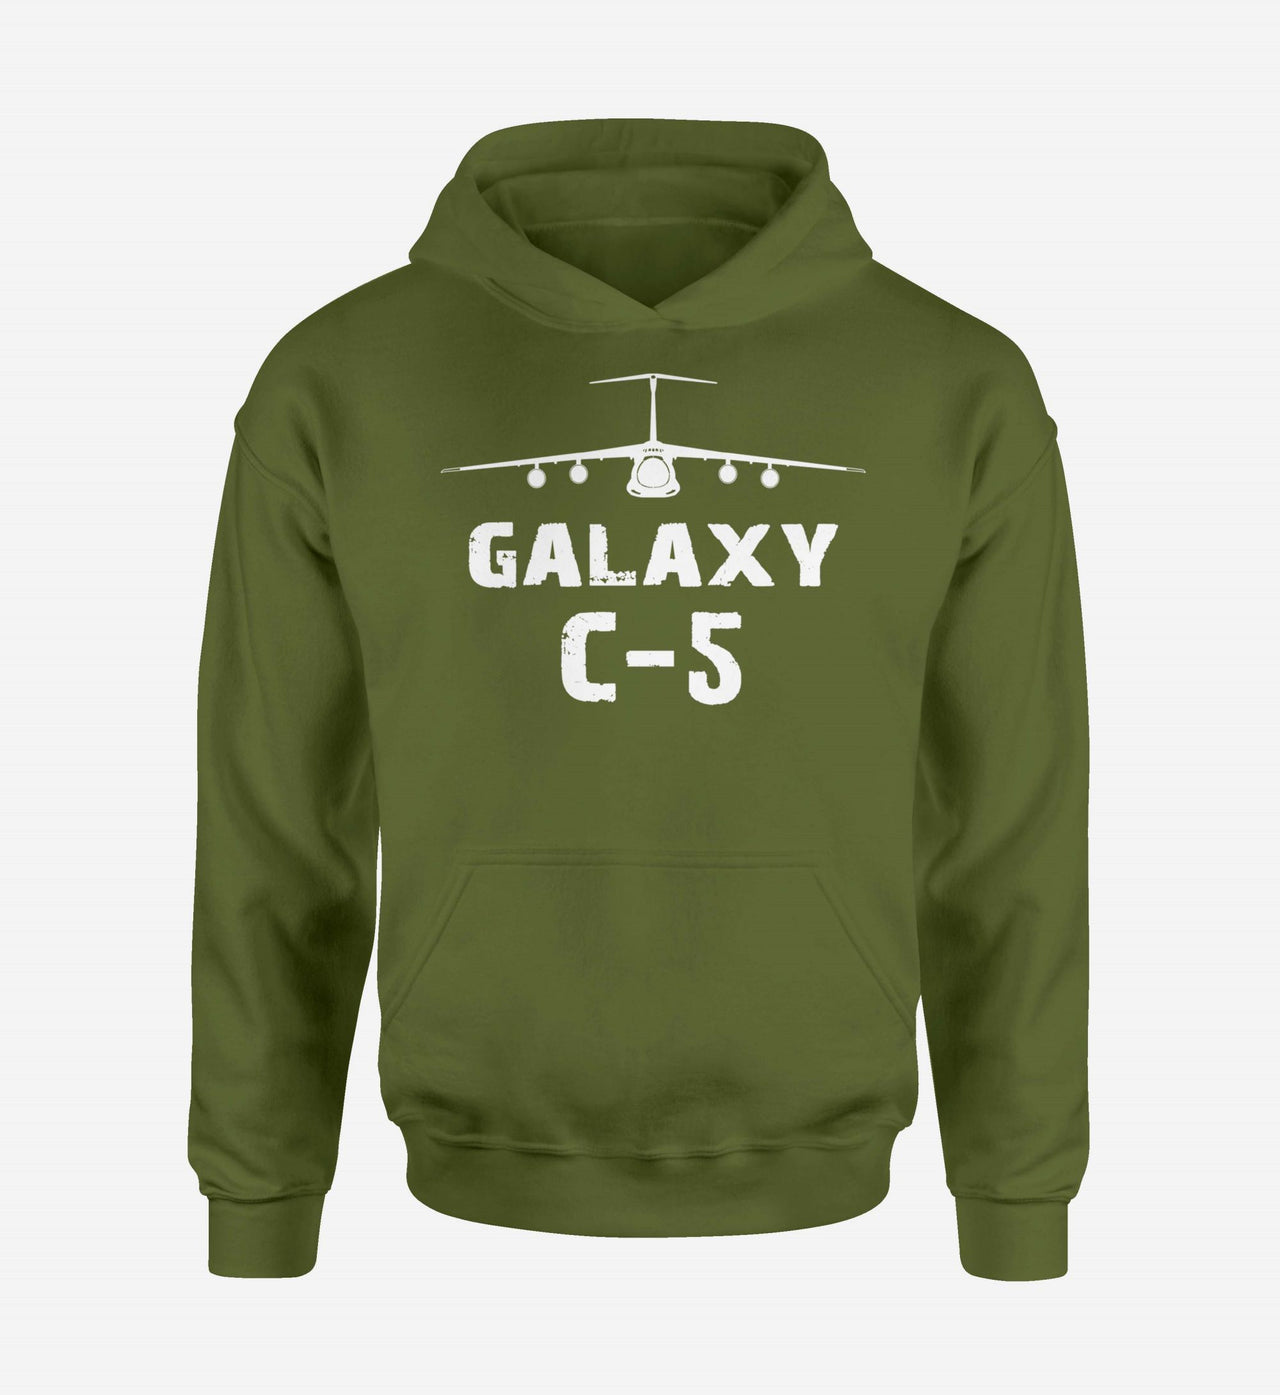 Galaxy C-5 & Plane Designed Hoodies